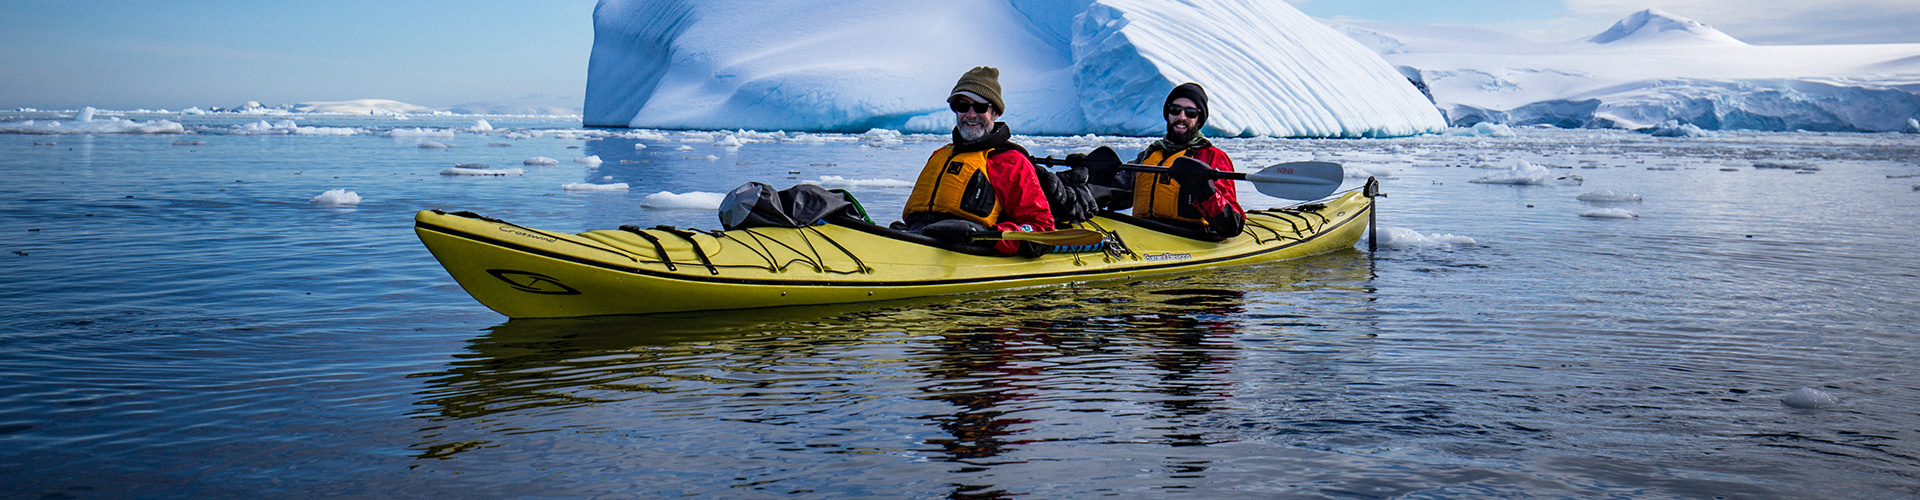 Photography Series: Antarctic Explorer